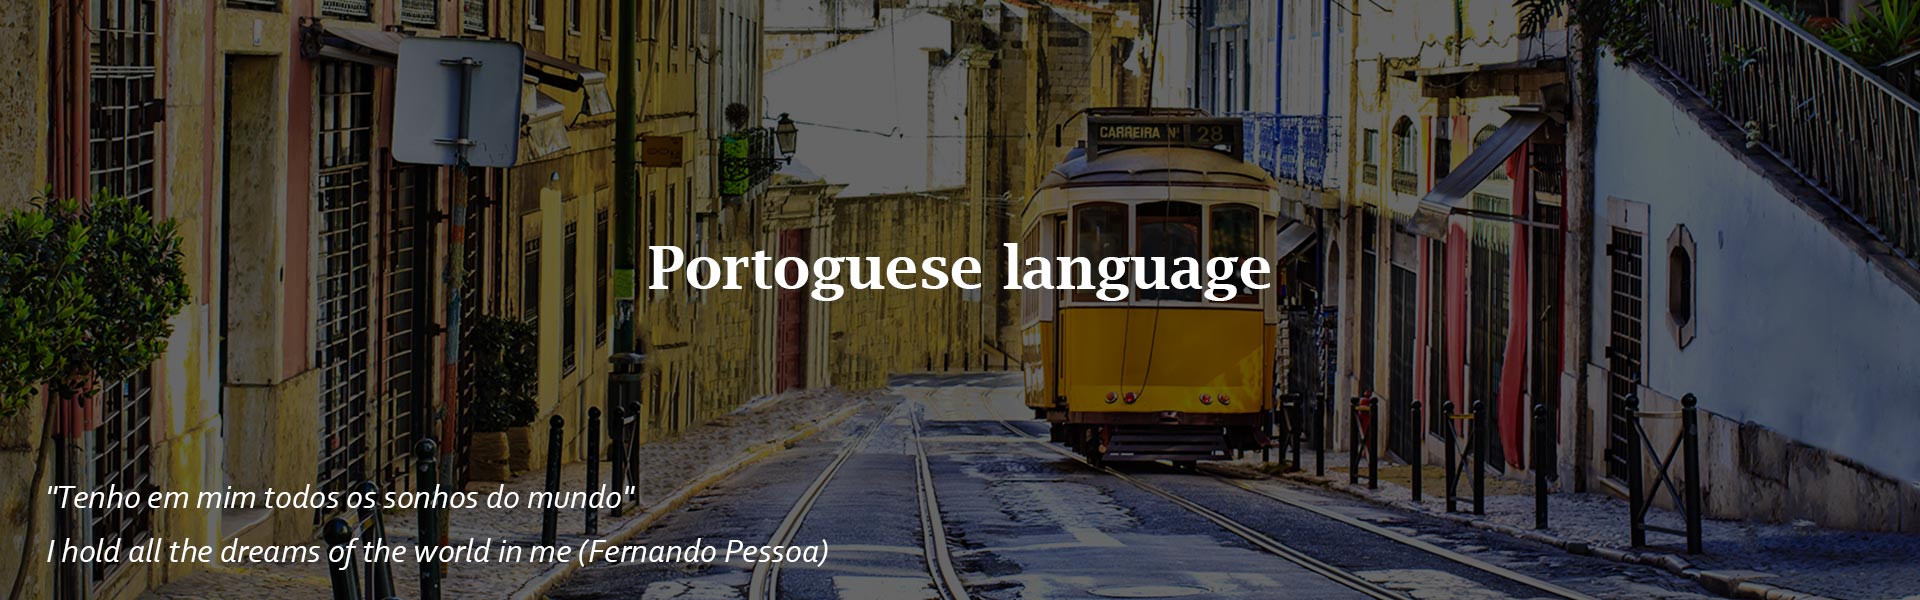 Portoguese-language-Alif